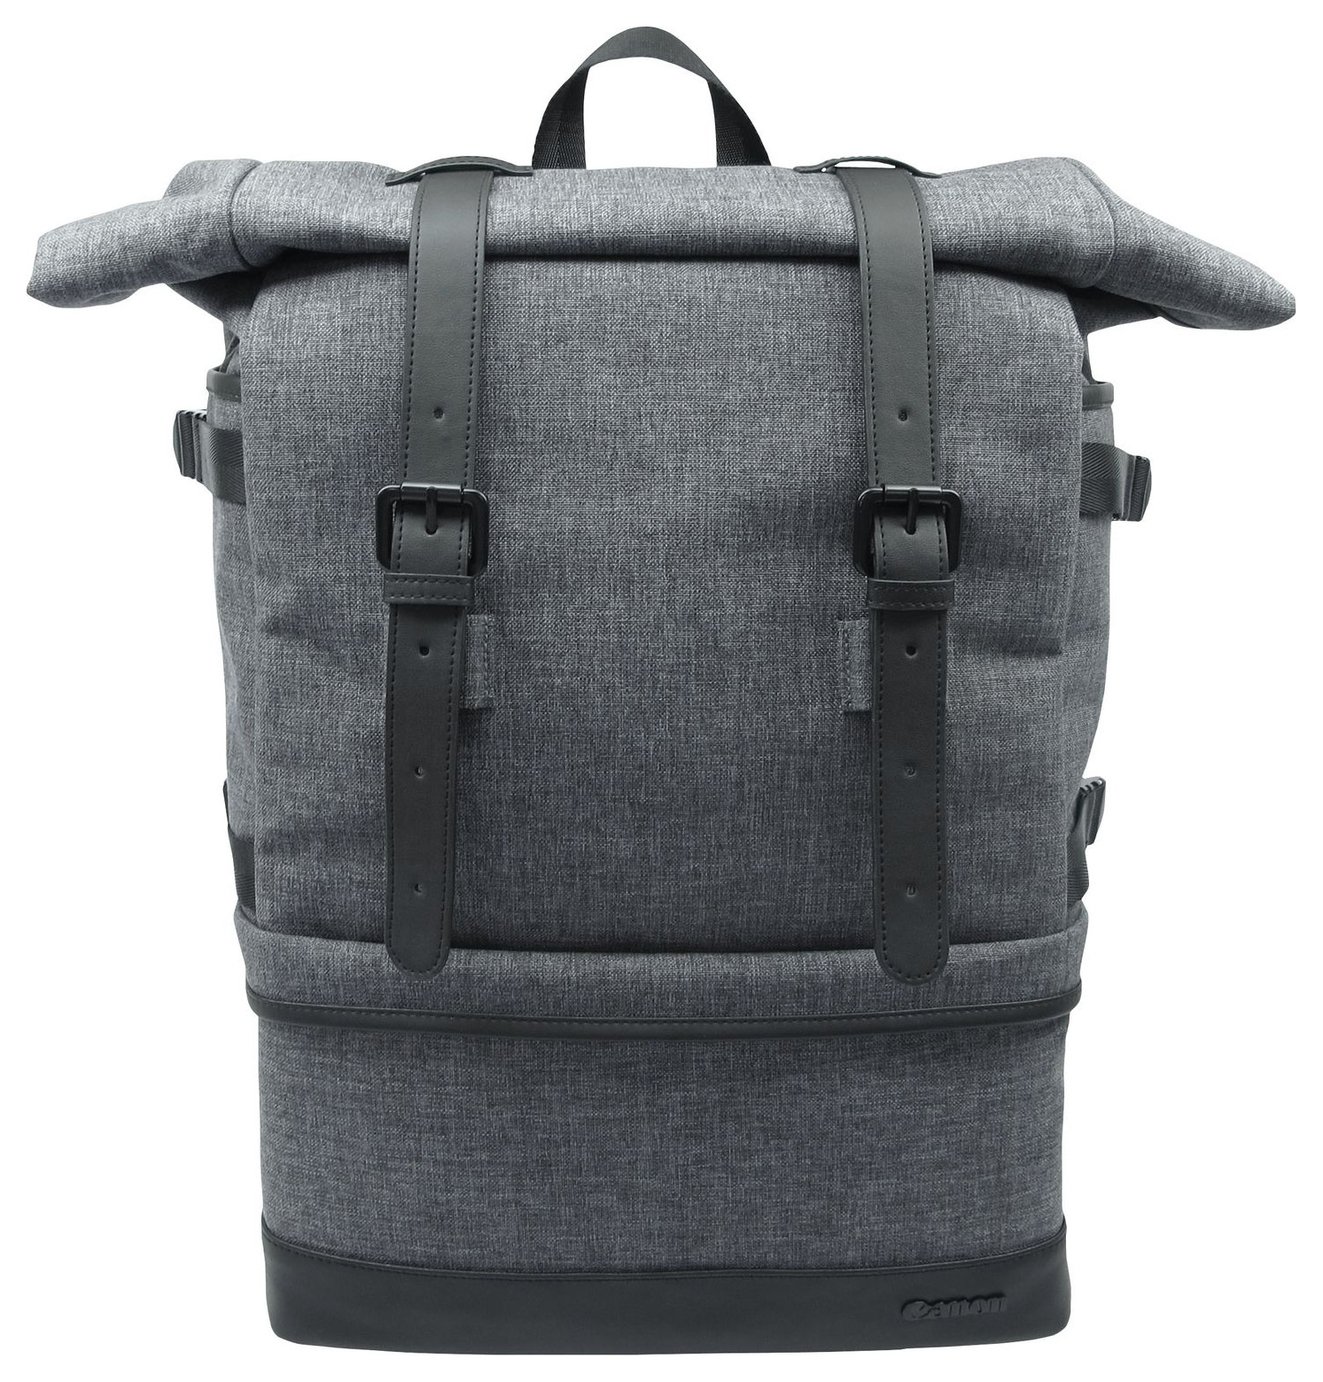 Canon BP10 DSLR Camera Backpack - Grey